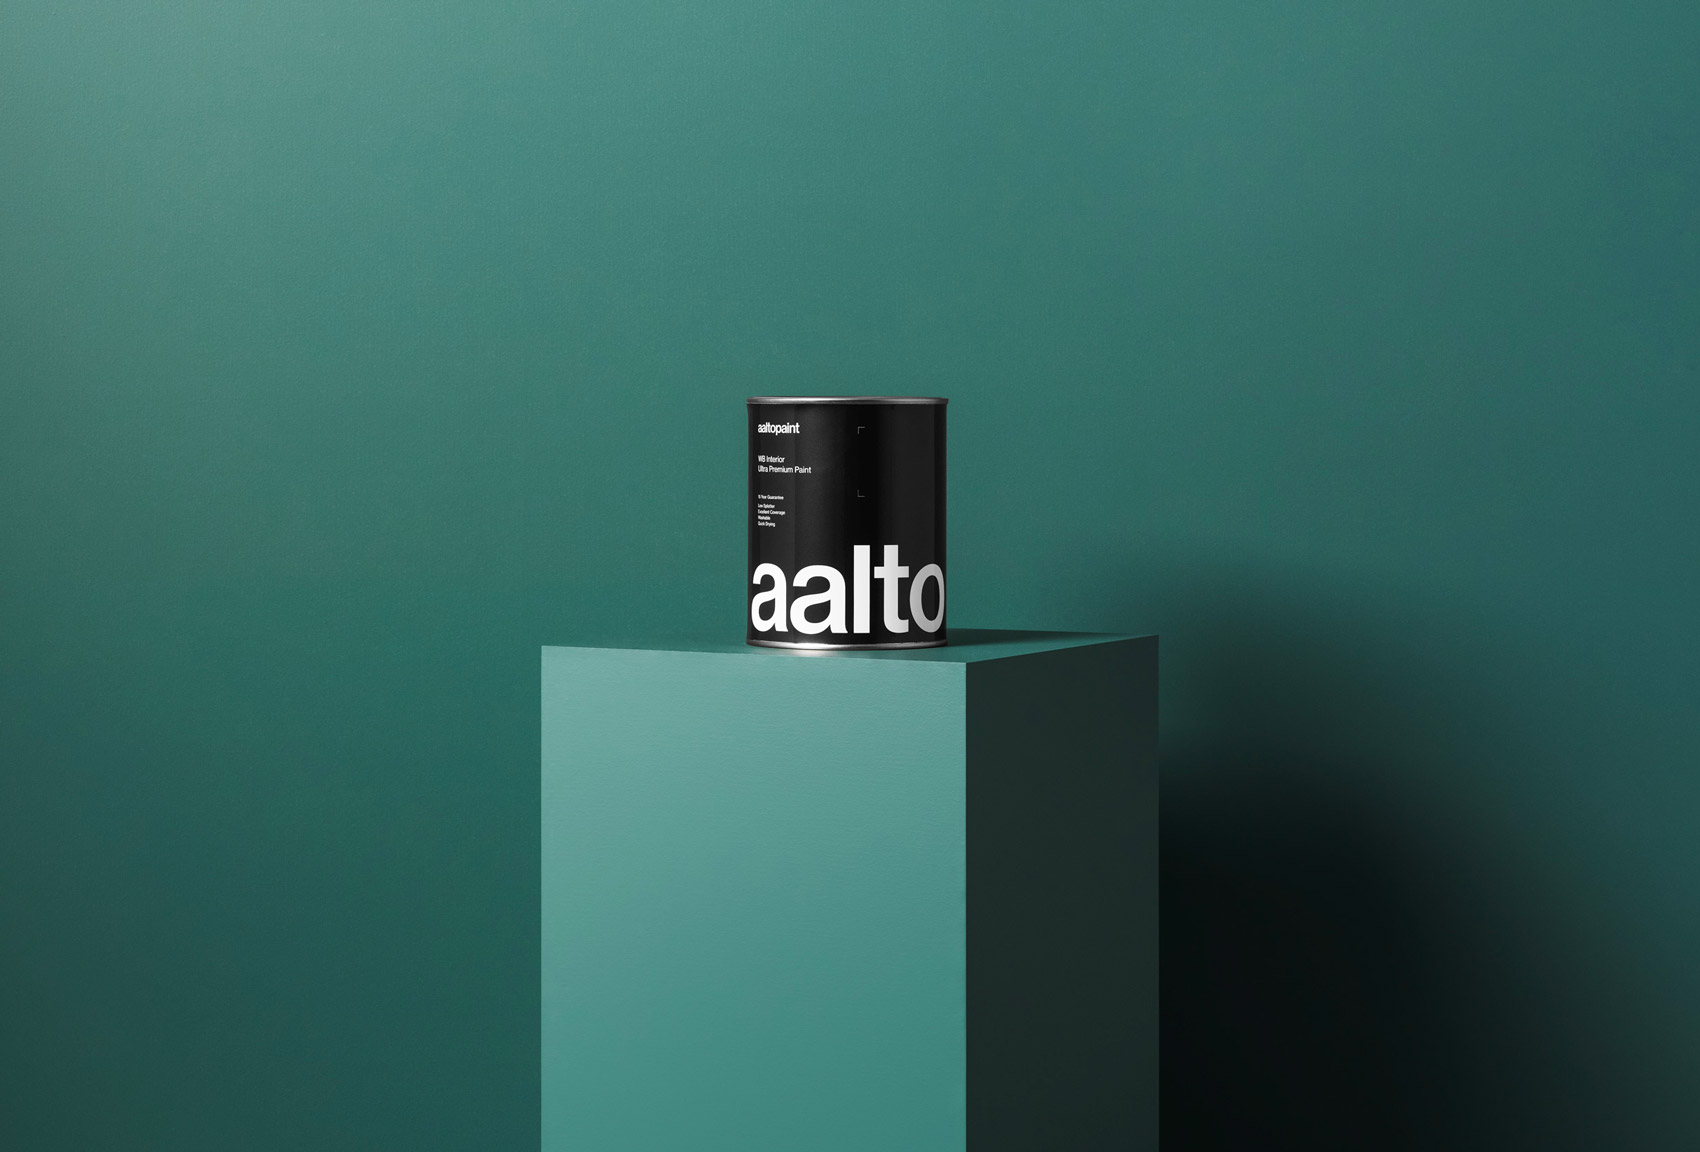 Aalto Paint – Visual Journal